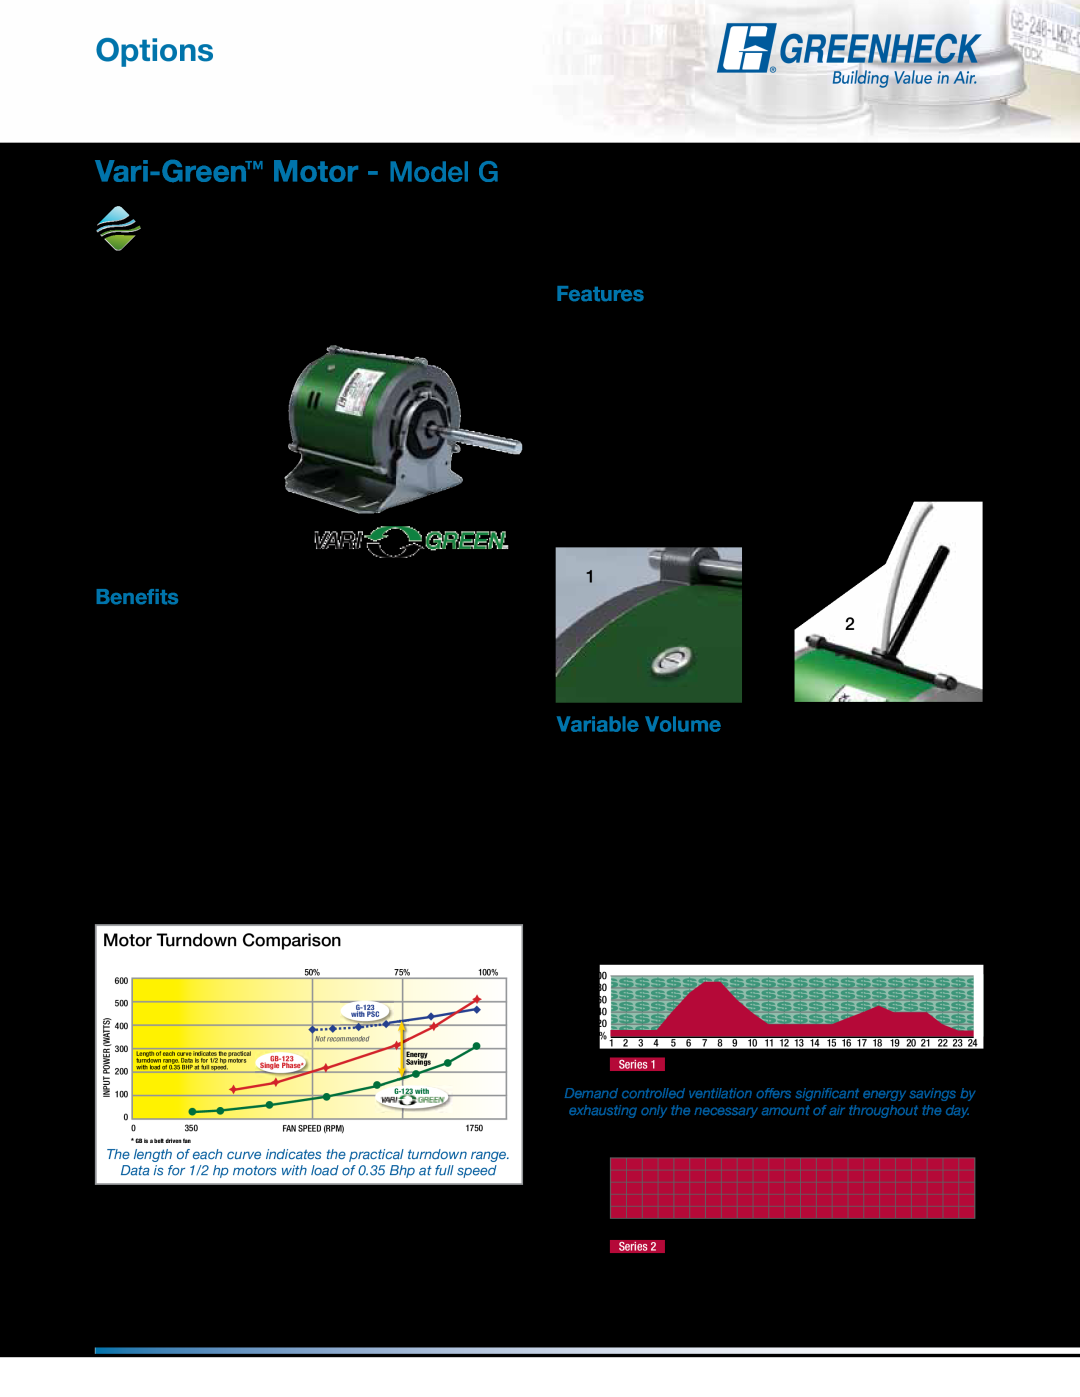 Greenheck Fan GB manual Options, Vari-Green Motor - Model G, Benefits, Features, Variable Volume 